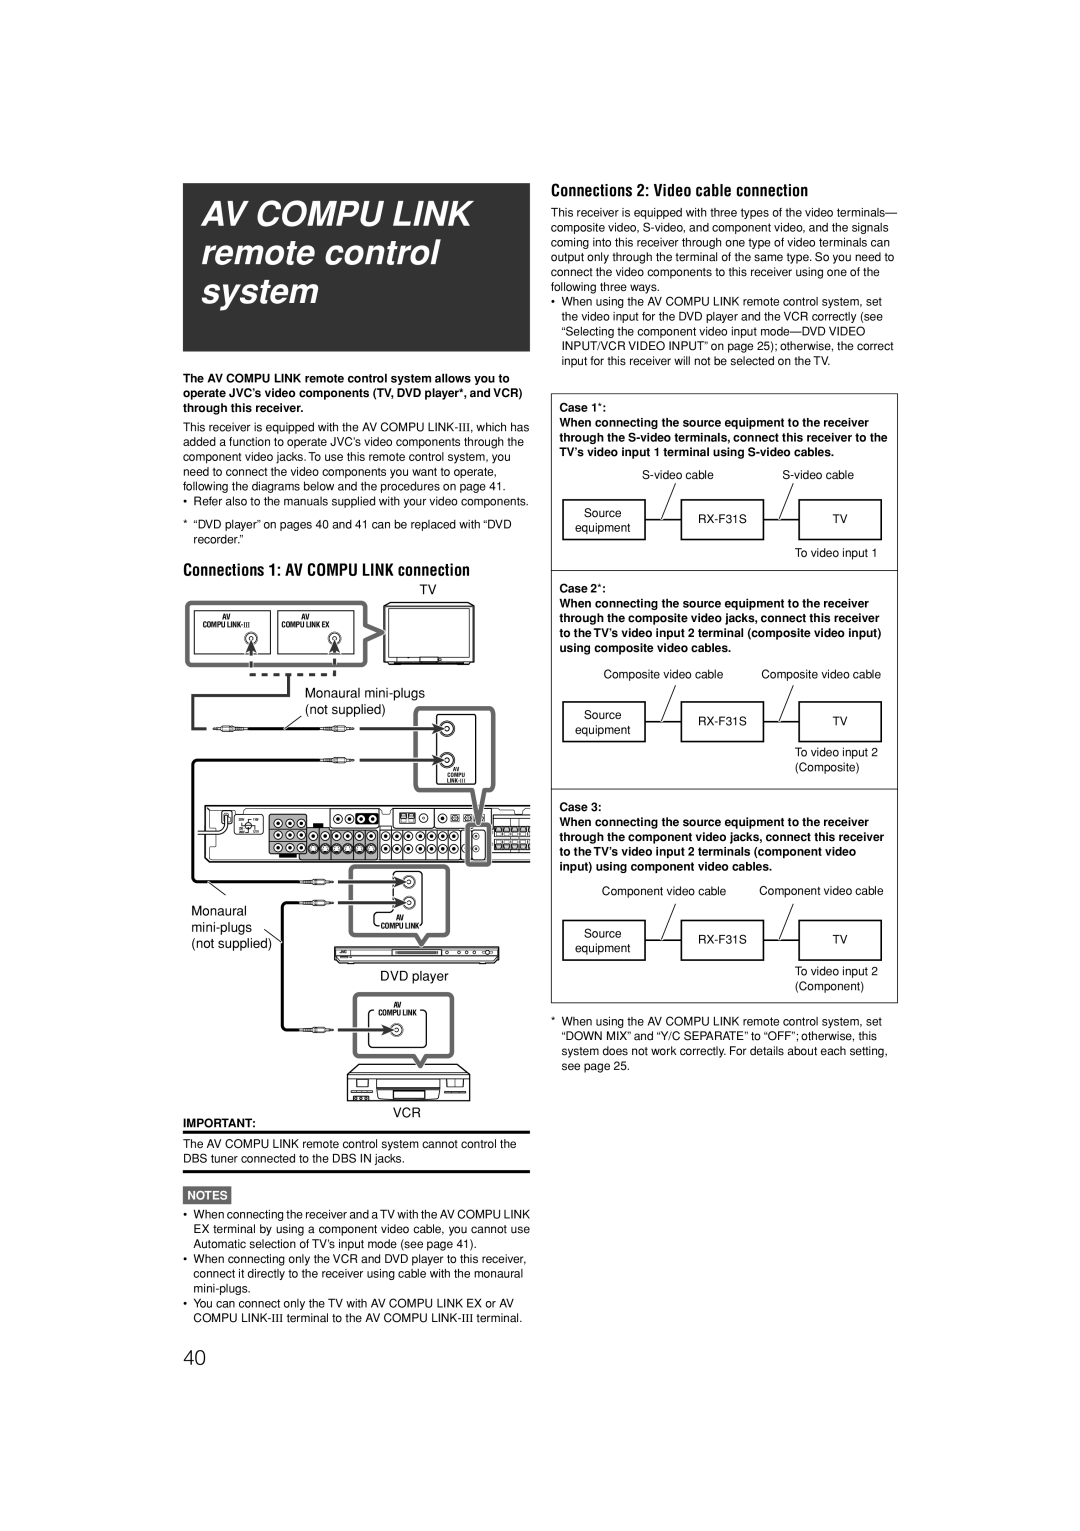 JVC RX-F31S manual AV COMPU LINK remote control system, Connections 1: AV COMPU LINK connection, Notes 